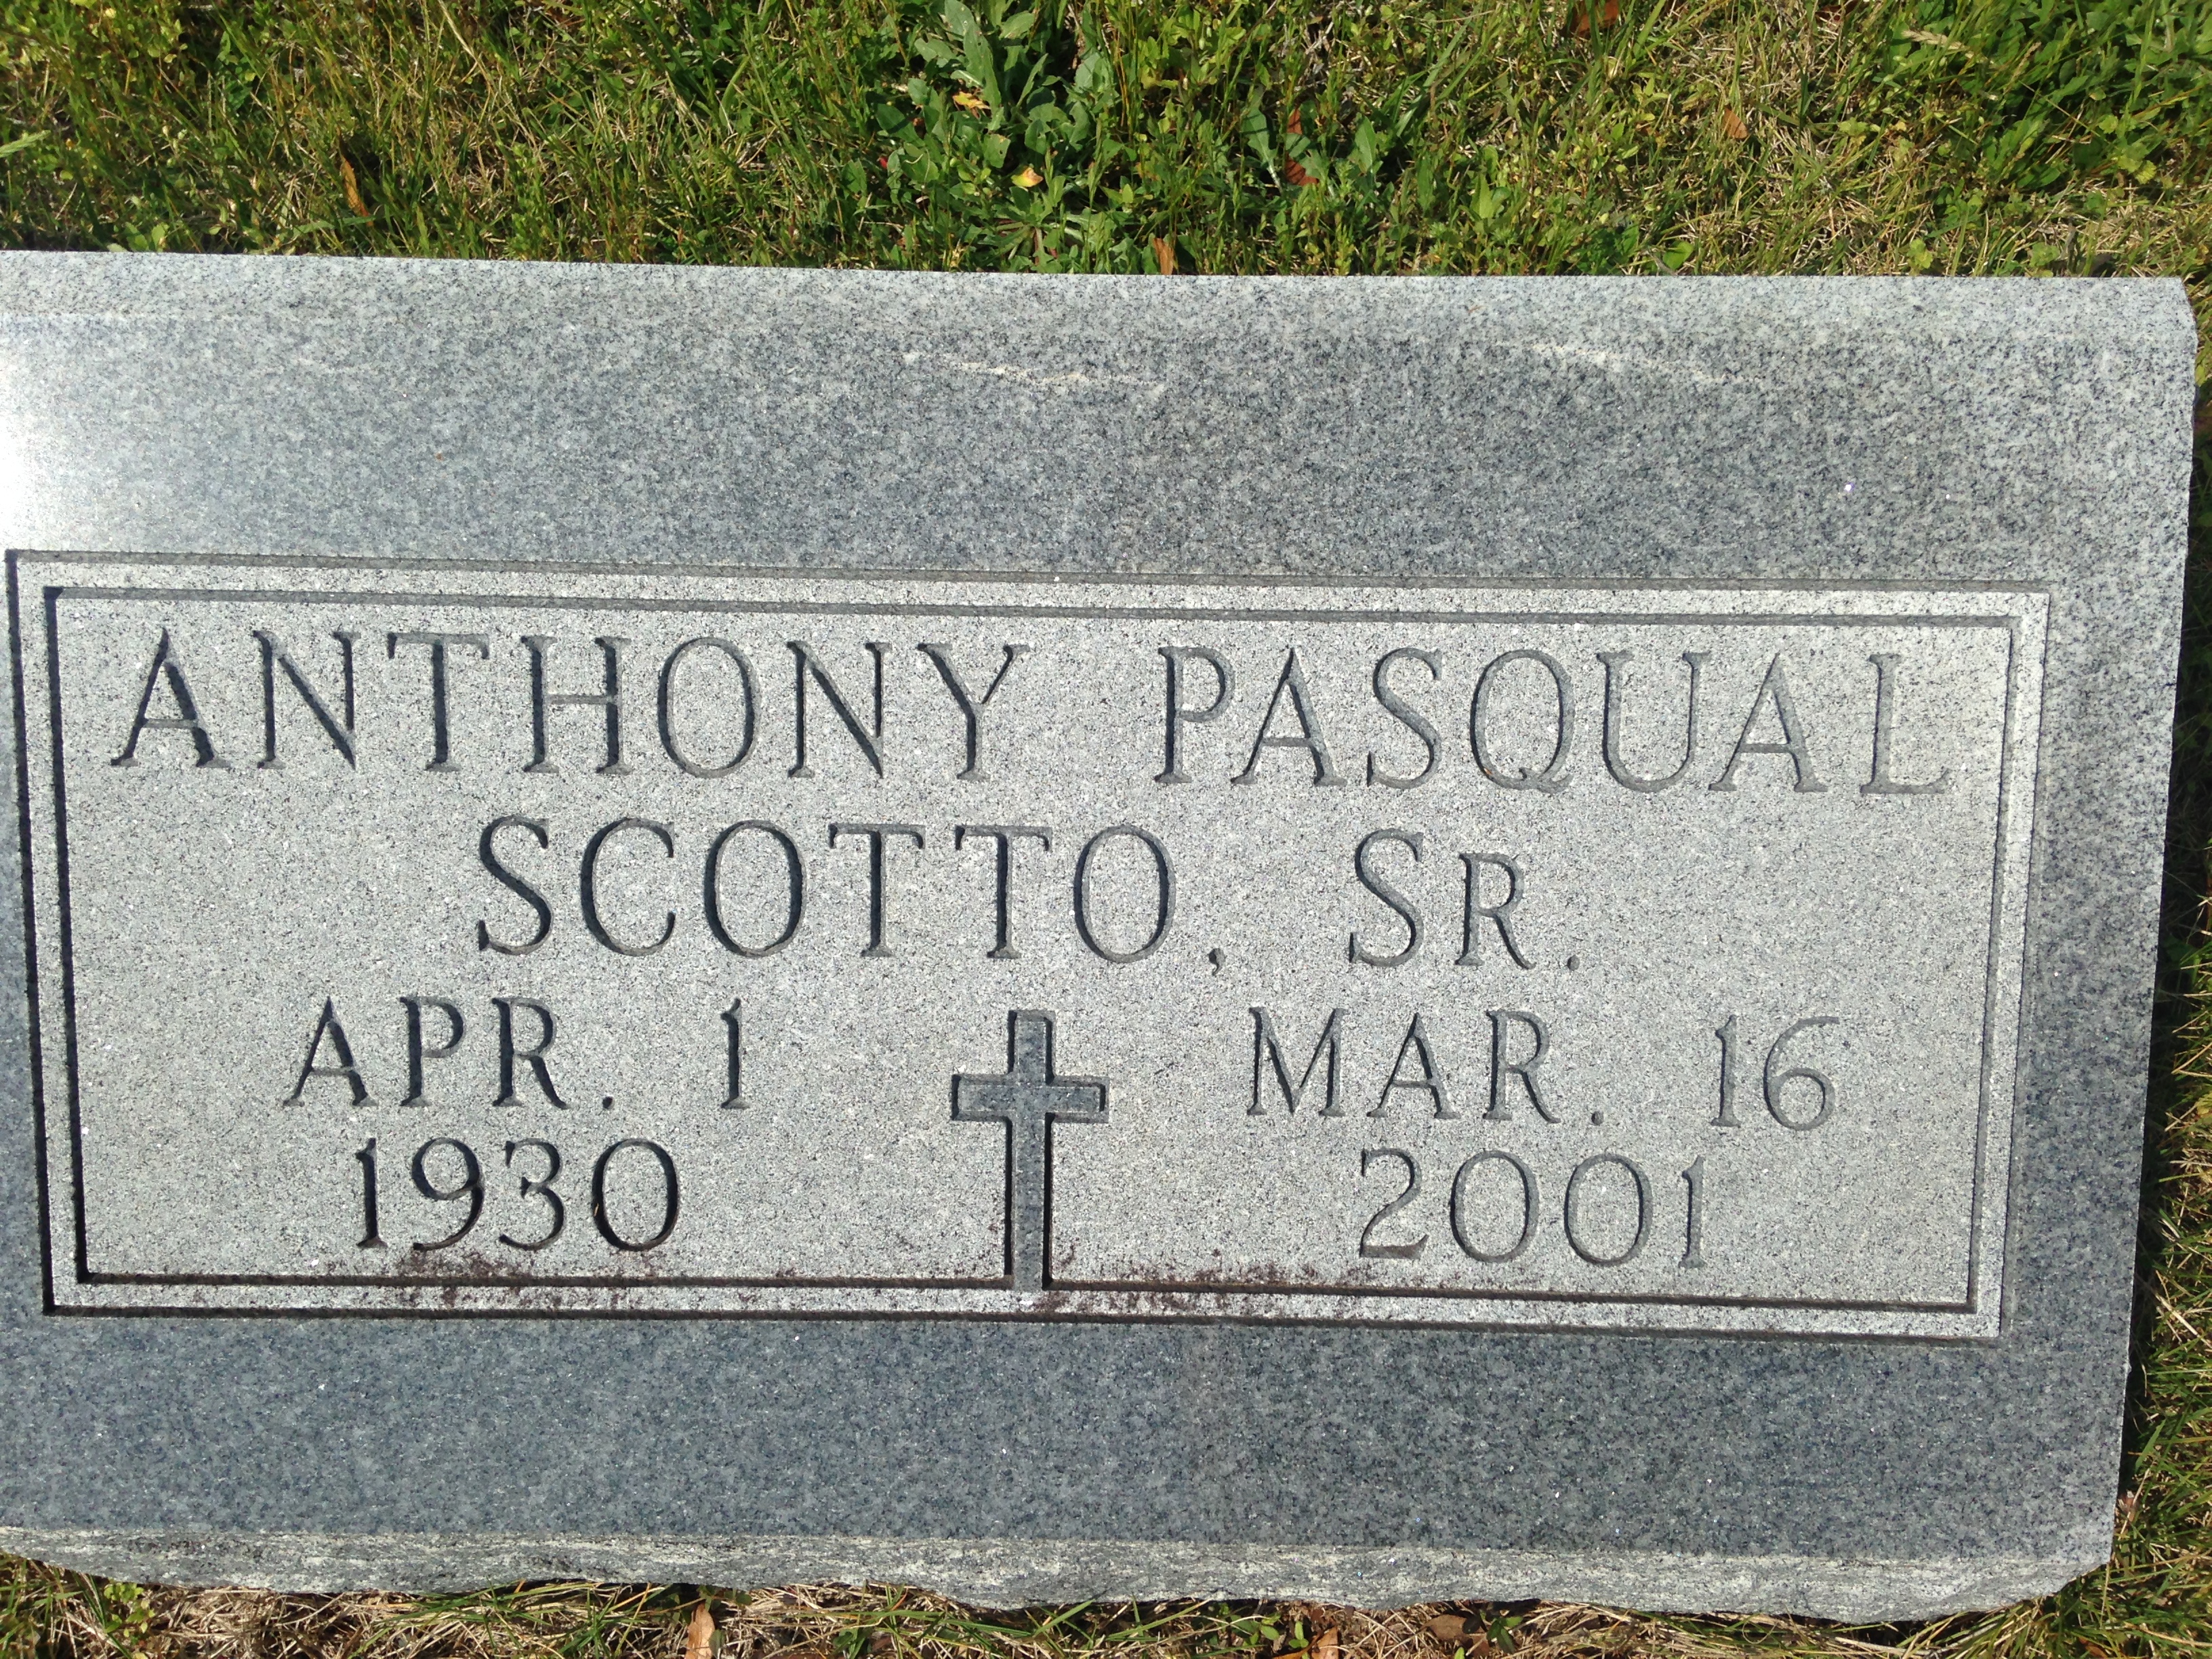 Anthony Pasquale Sr. Scotto